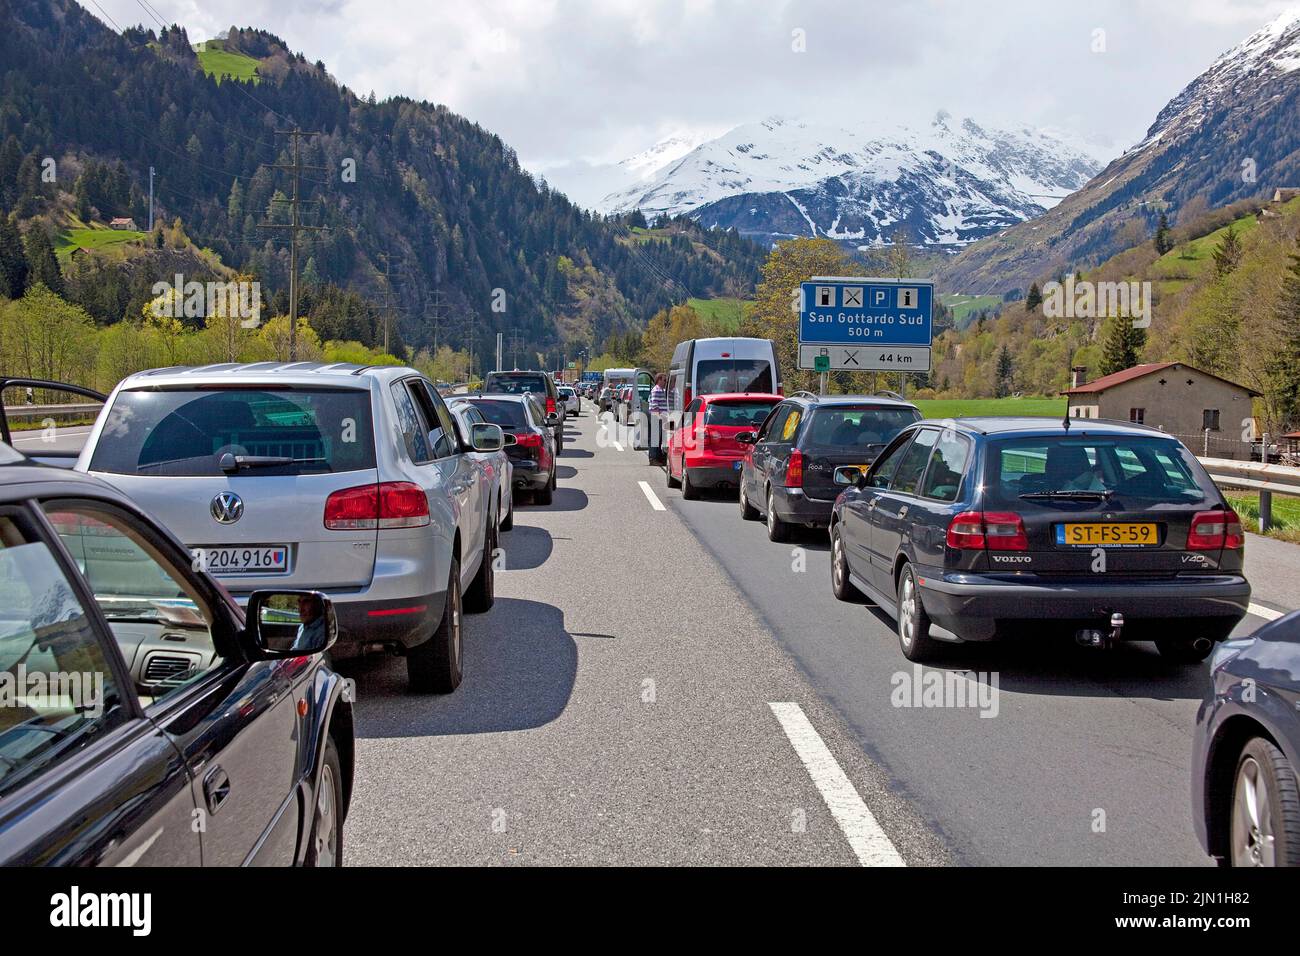 Línea de coches, atasco de tráfico en la autopista en el túnel de San Gotthard, Suiza, Europa Foto de stock